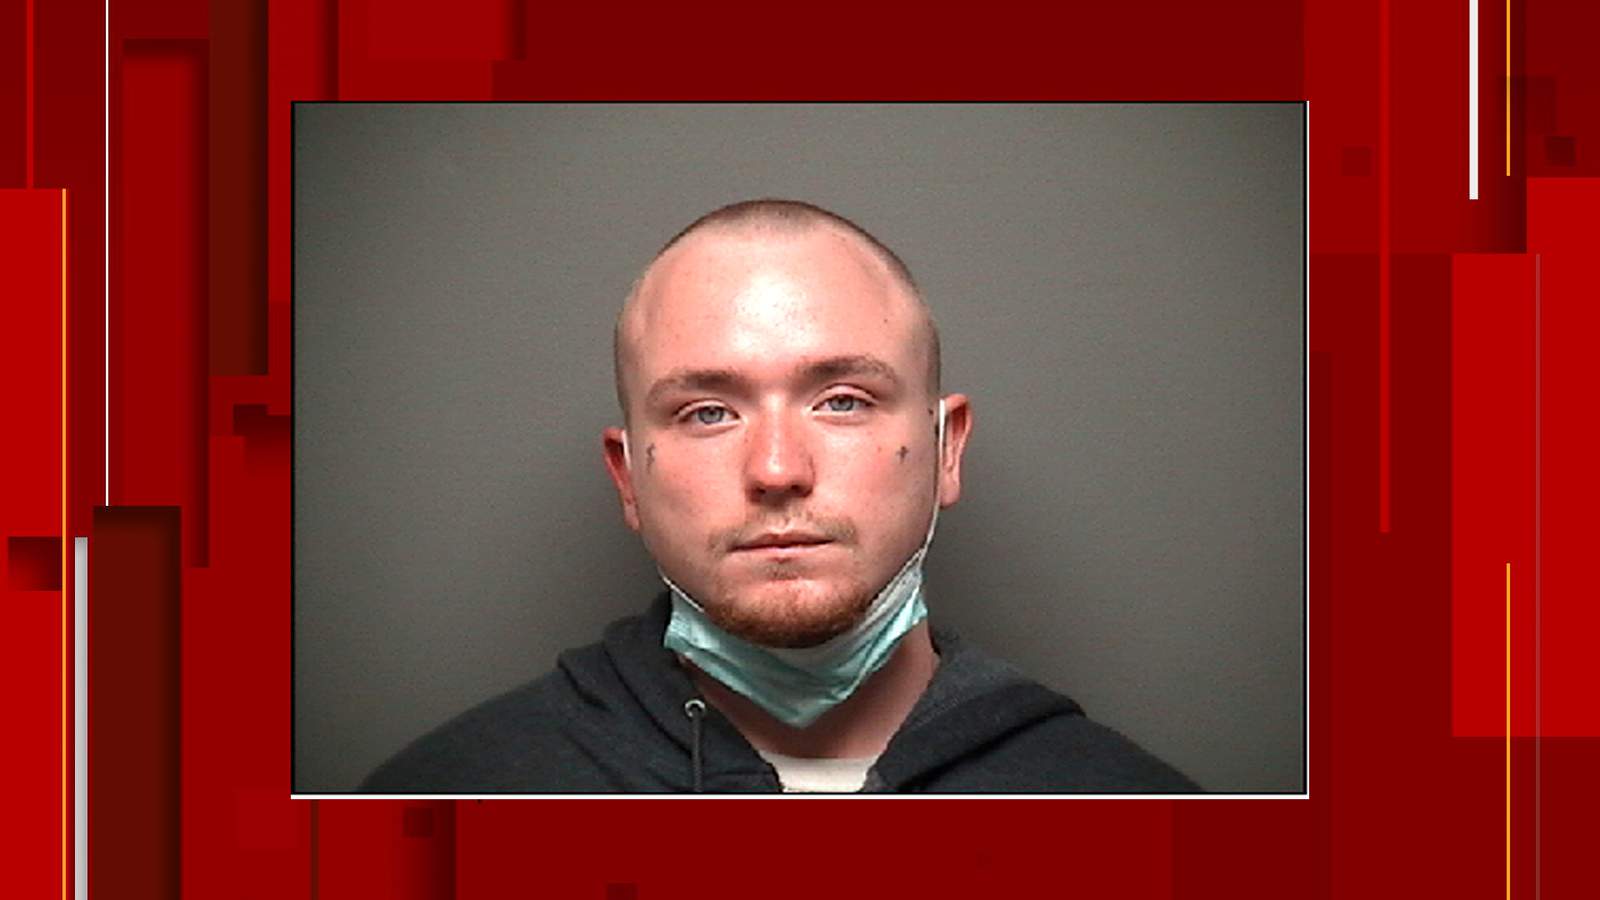 Man arrested after sticking phone under woman’s bathroom stall at a Salem Kroger, police say